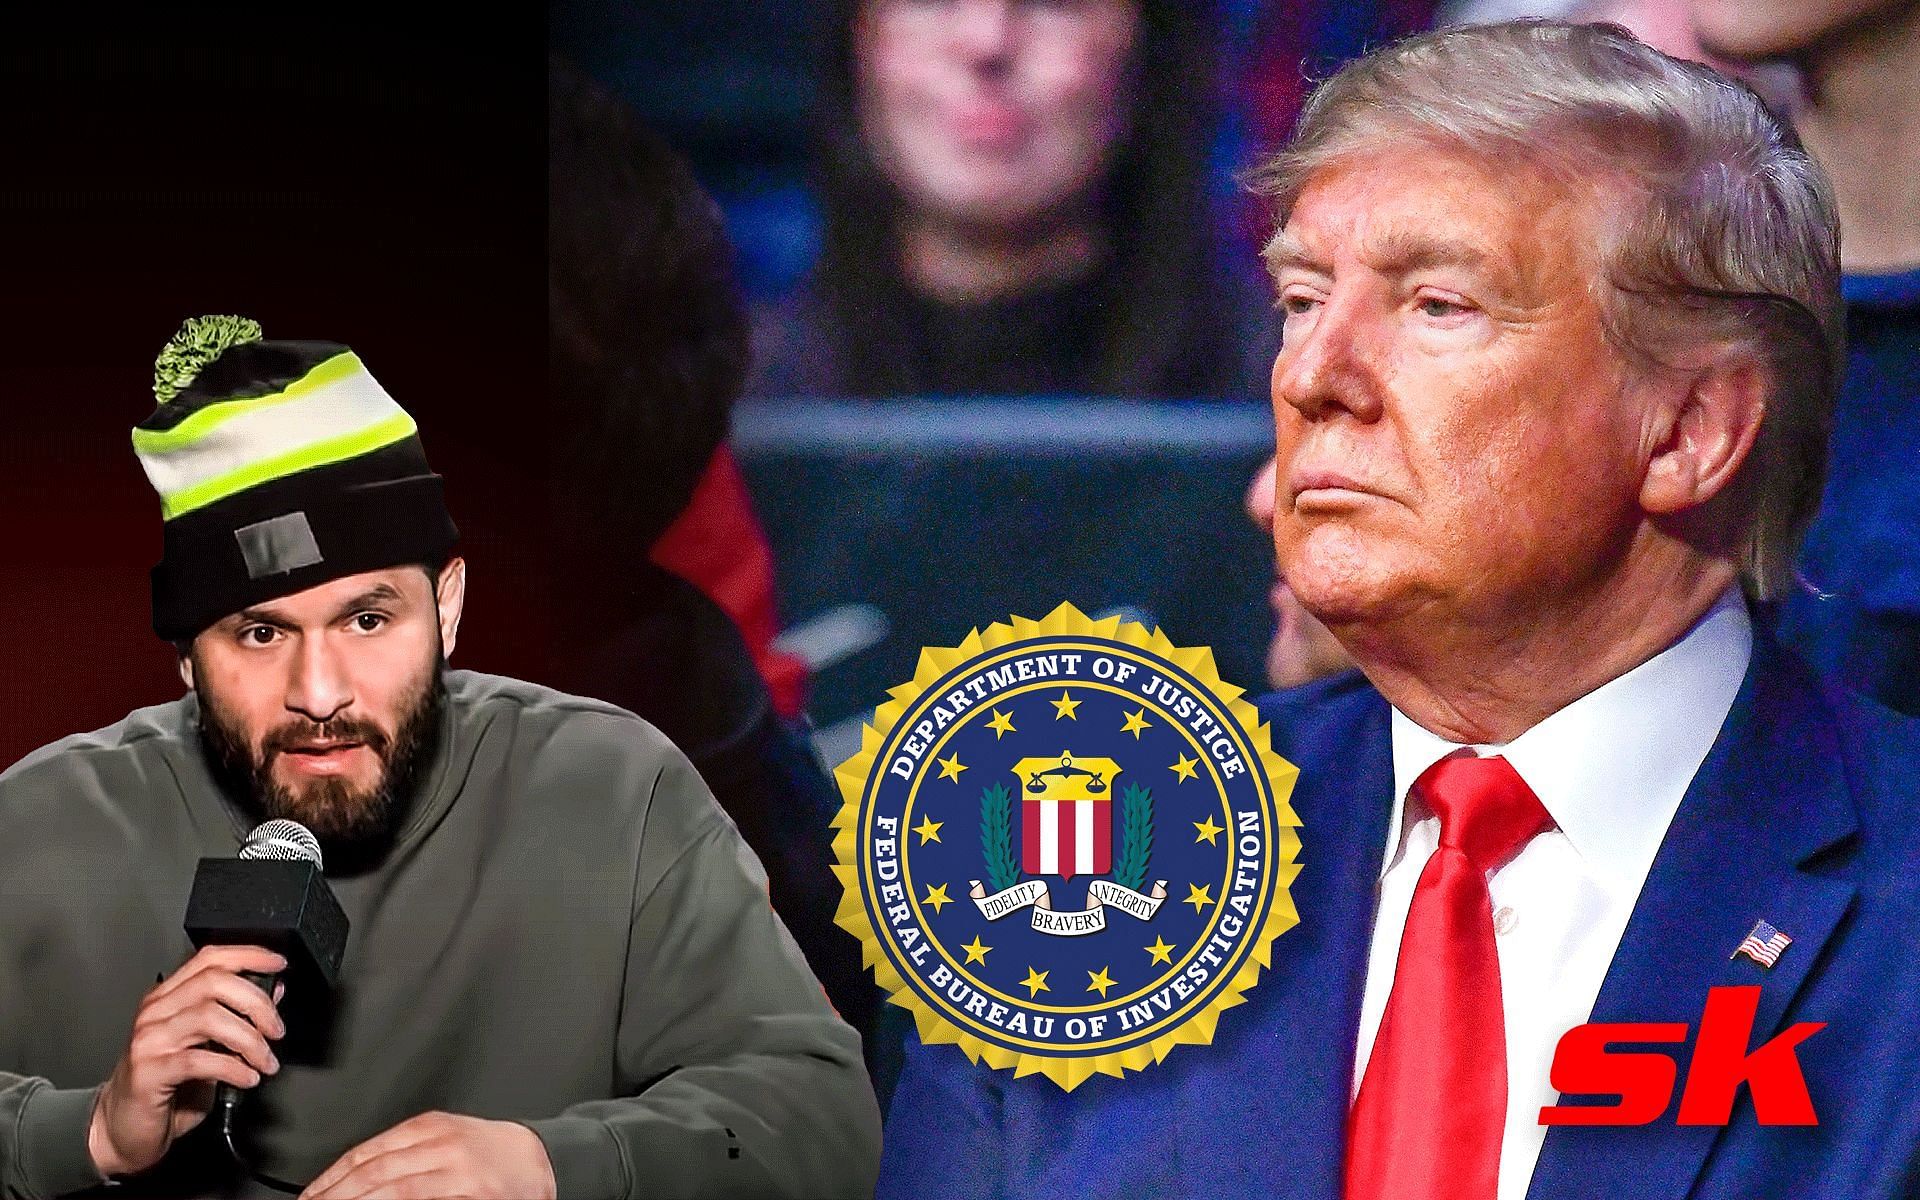 Jorge Masvidal (left) and Donald Trump (right) [Photo credit: YouTube.com, FBI.gov]